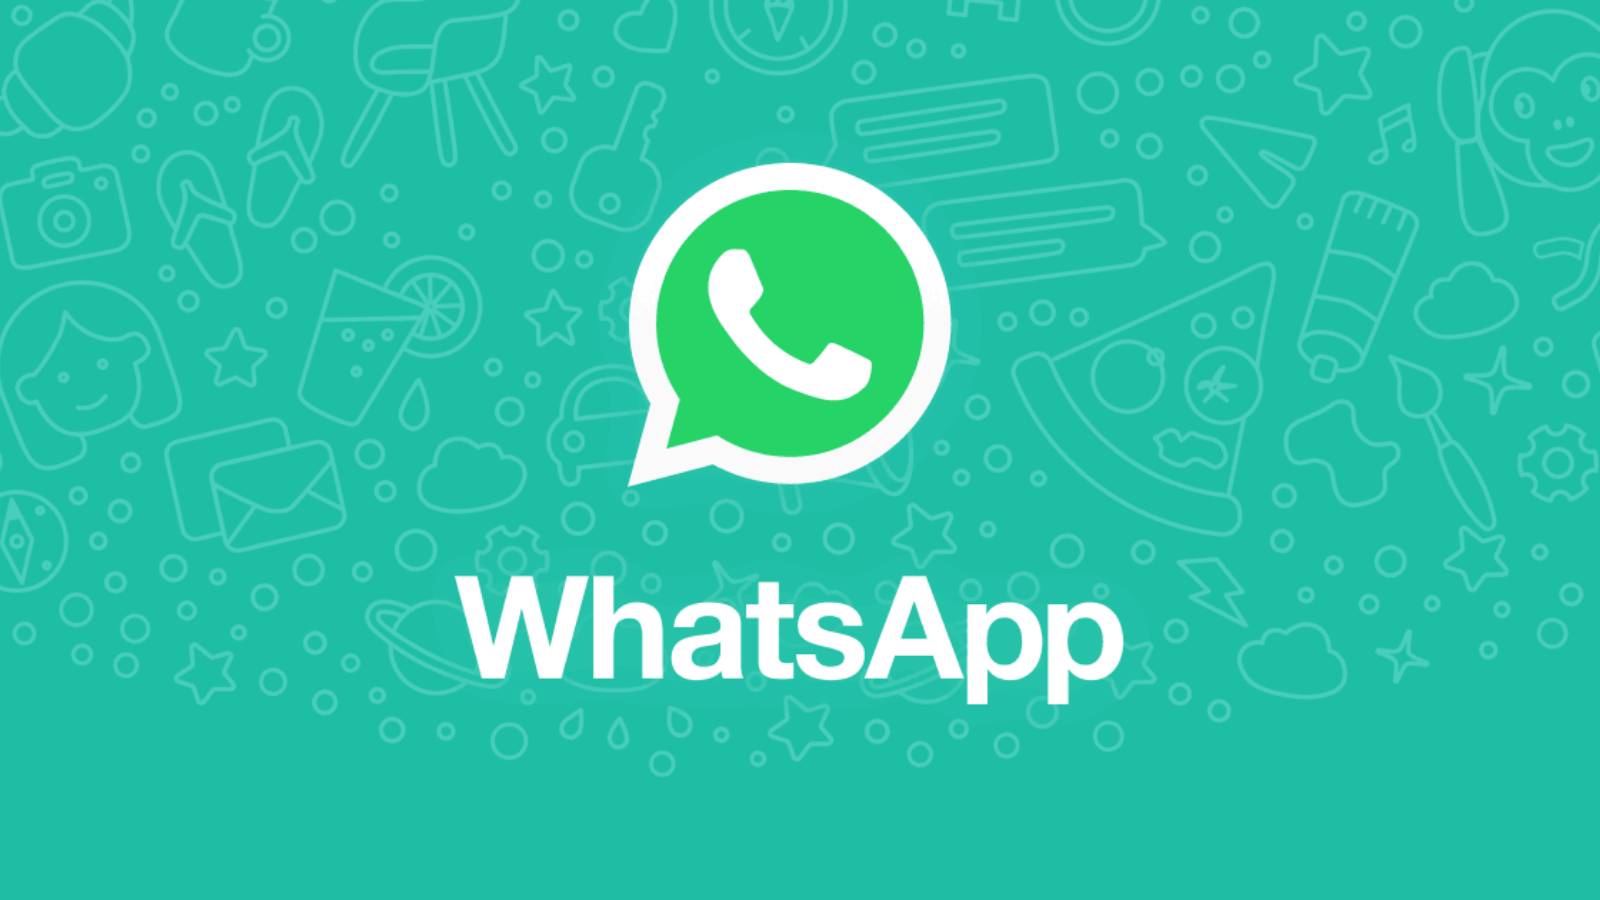 WhatsApp Anunta OFICIAL Lansarea SCHIMBARI Majore iPhone Android